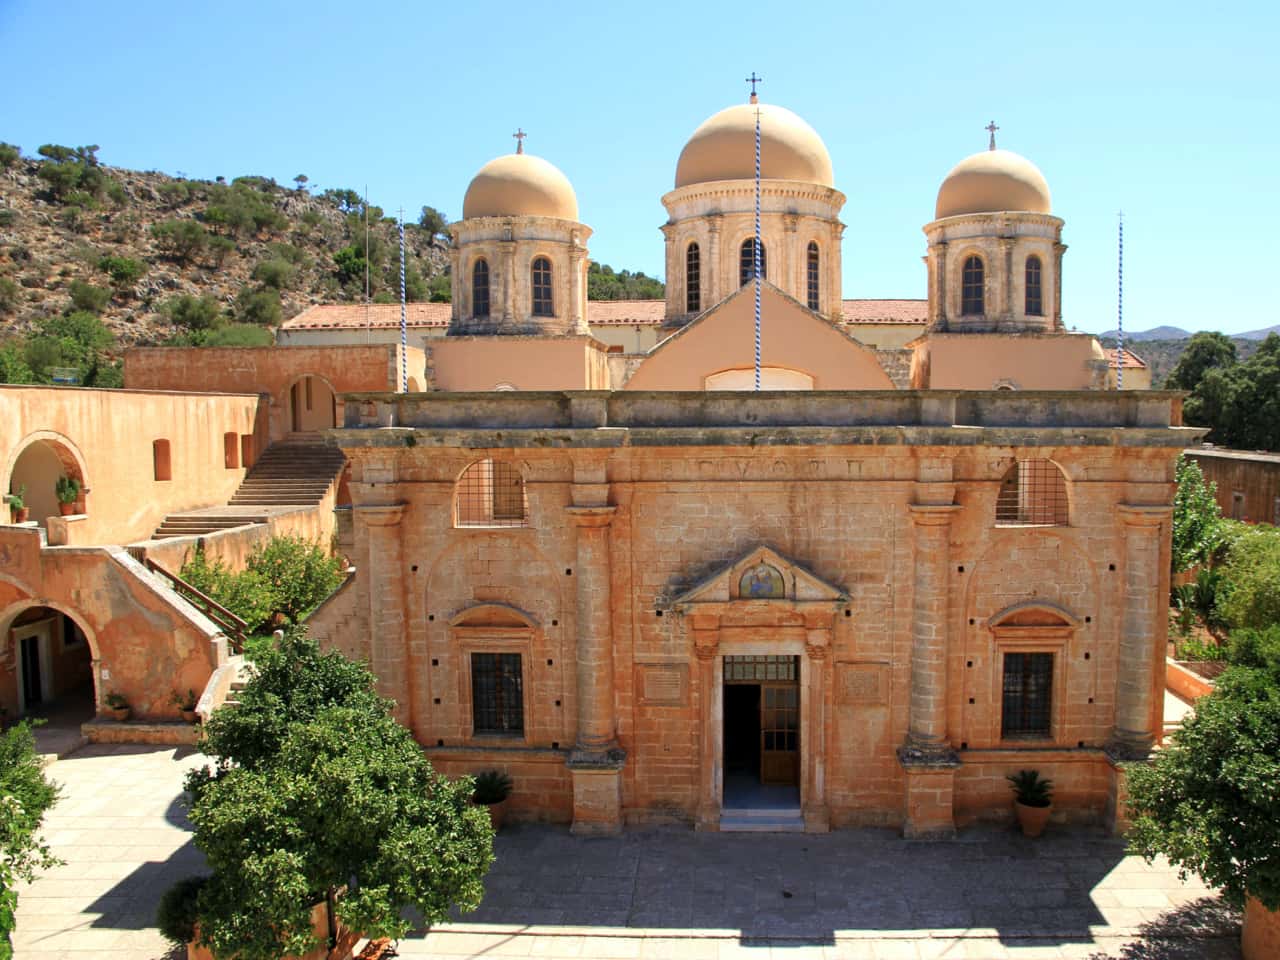 Agia Triada (Holy Trinity), or the Tsangarolon Monastery of the 17th century